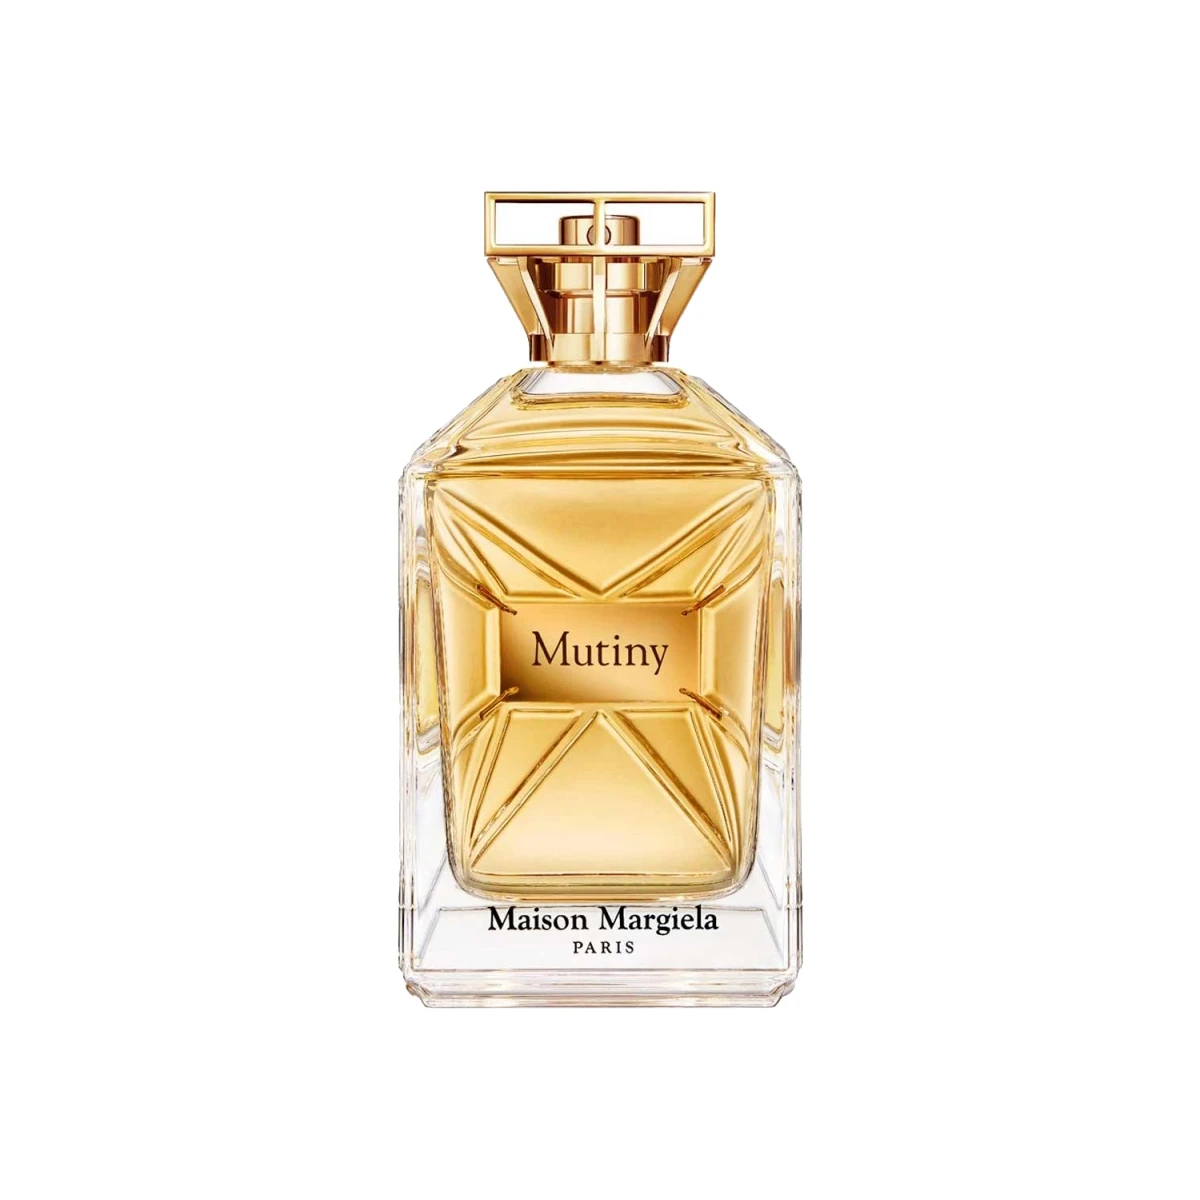 Maison Margiela马丁马吉拉莫蒂尼中性香水 EDP浓香水50-90ml 商品